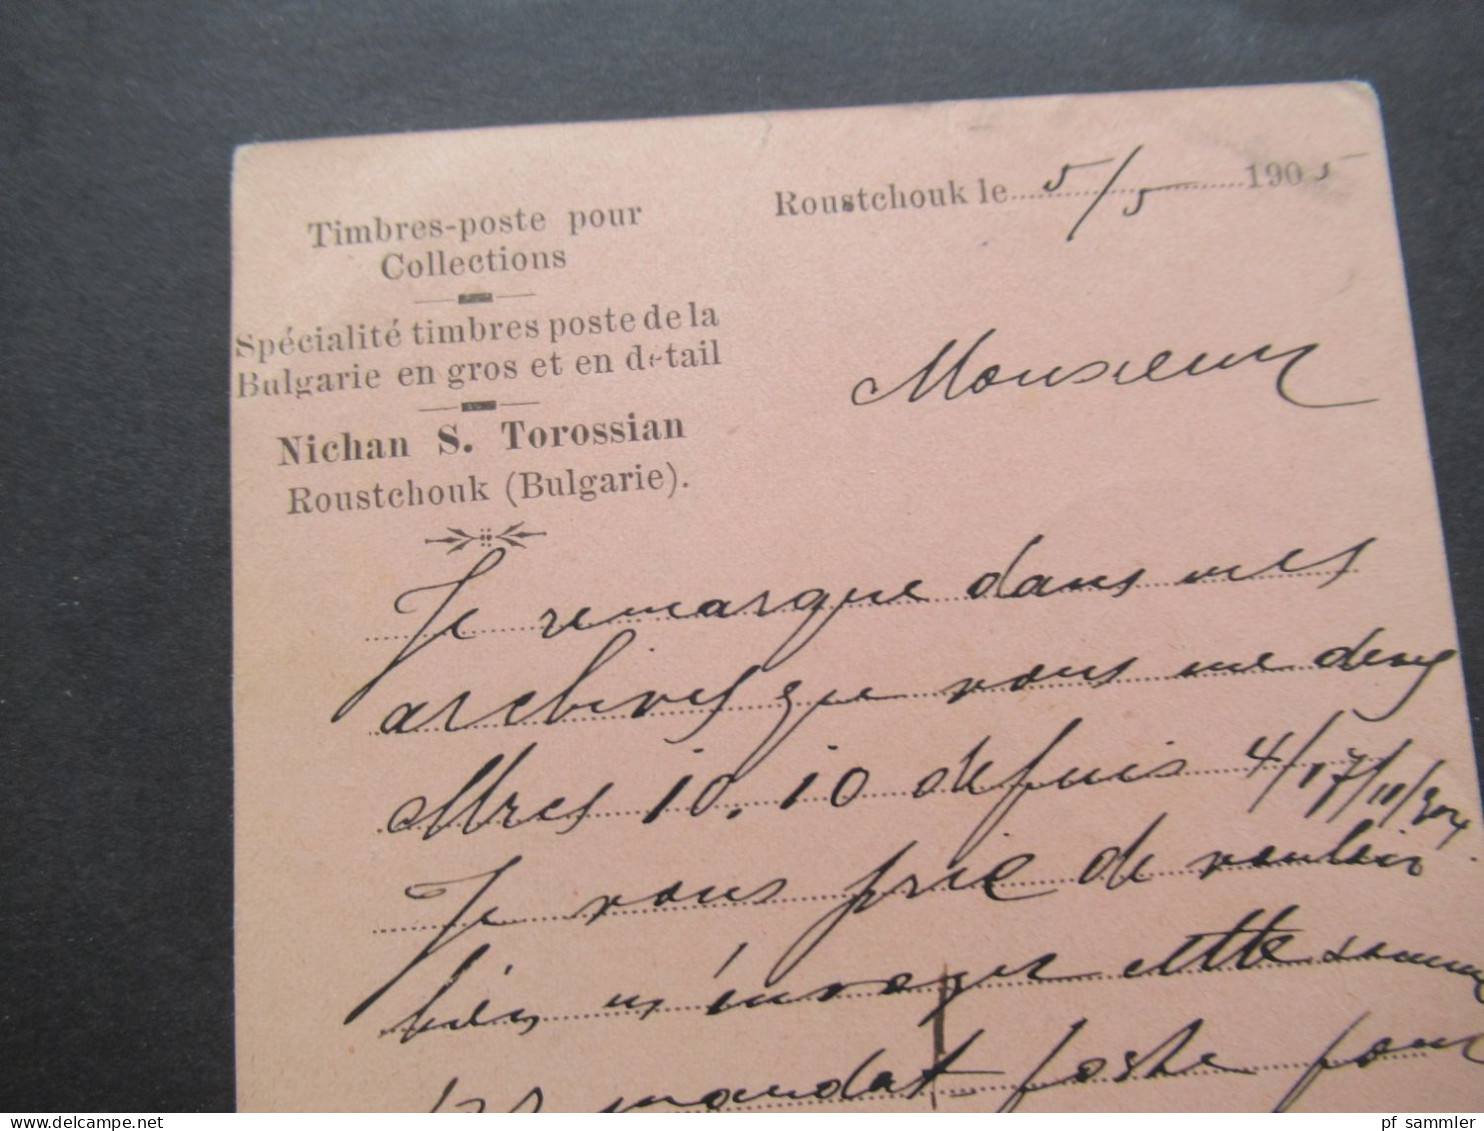 Bulgarien 1905 Firmen PK Timbres poste Nichan S. Torossian nach Stolp in Pommern gesendet mit Ank. Stempel